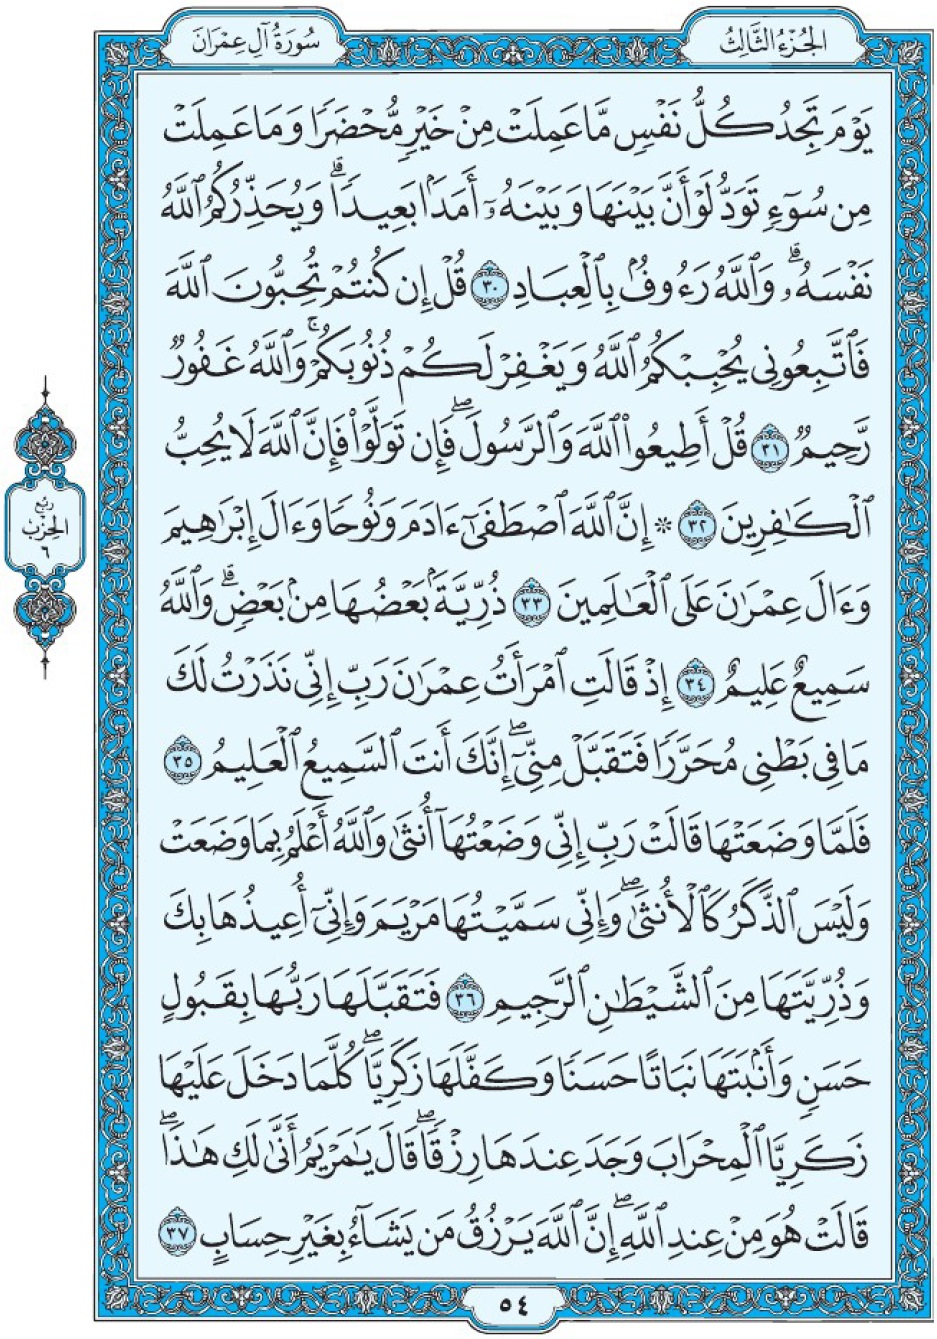 Коран Мединский мусхаф страница 54, Али Имран, аят 30-37